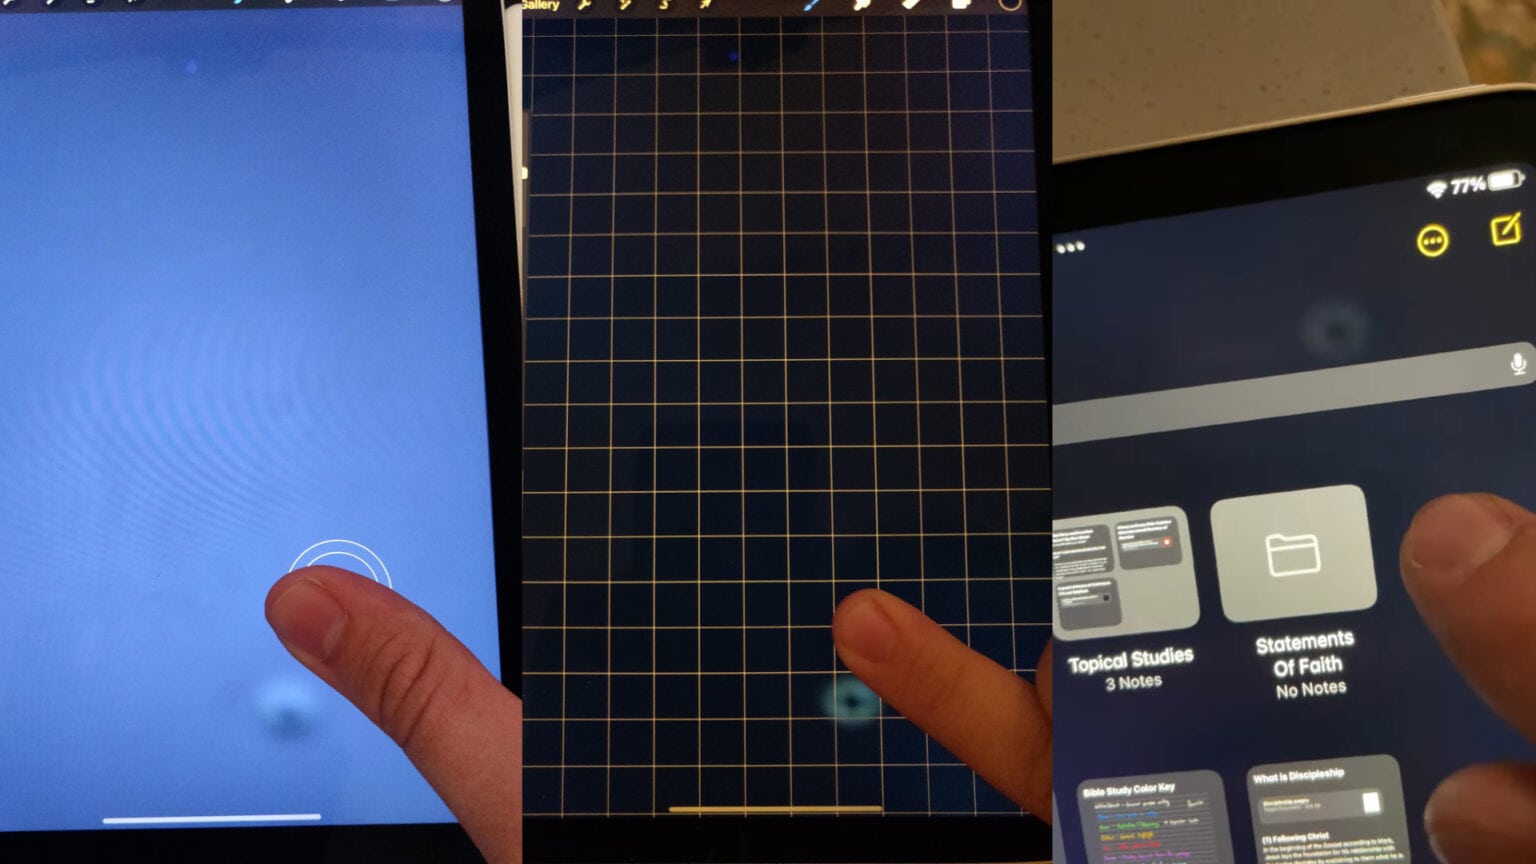 2021 iPad mini display issues